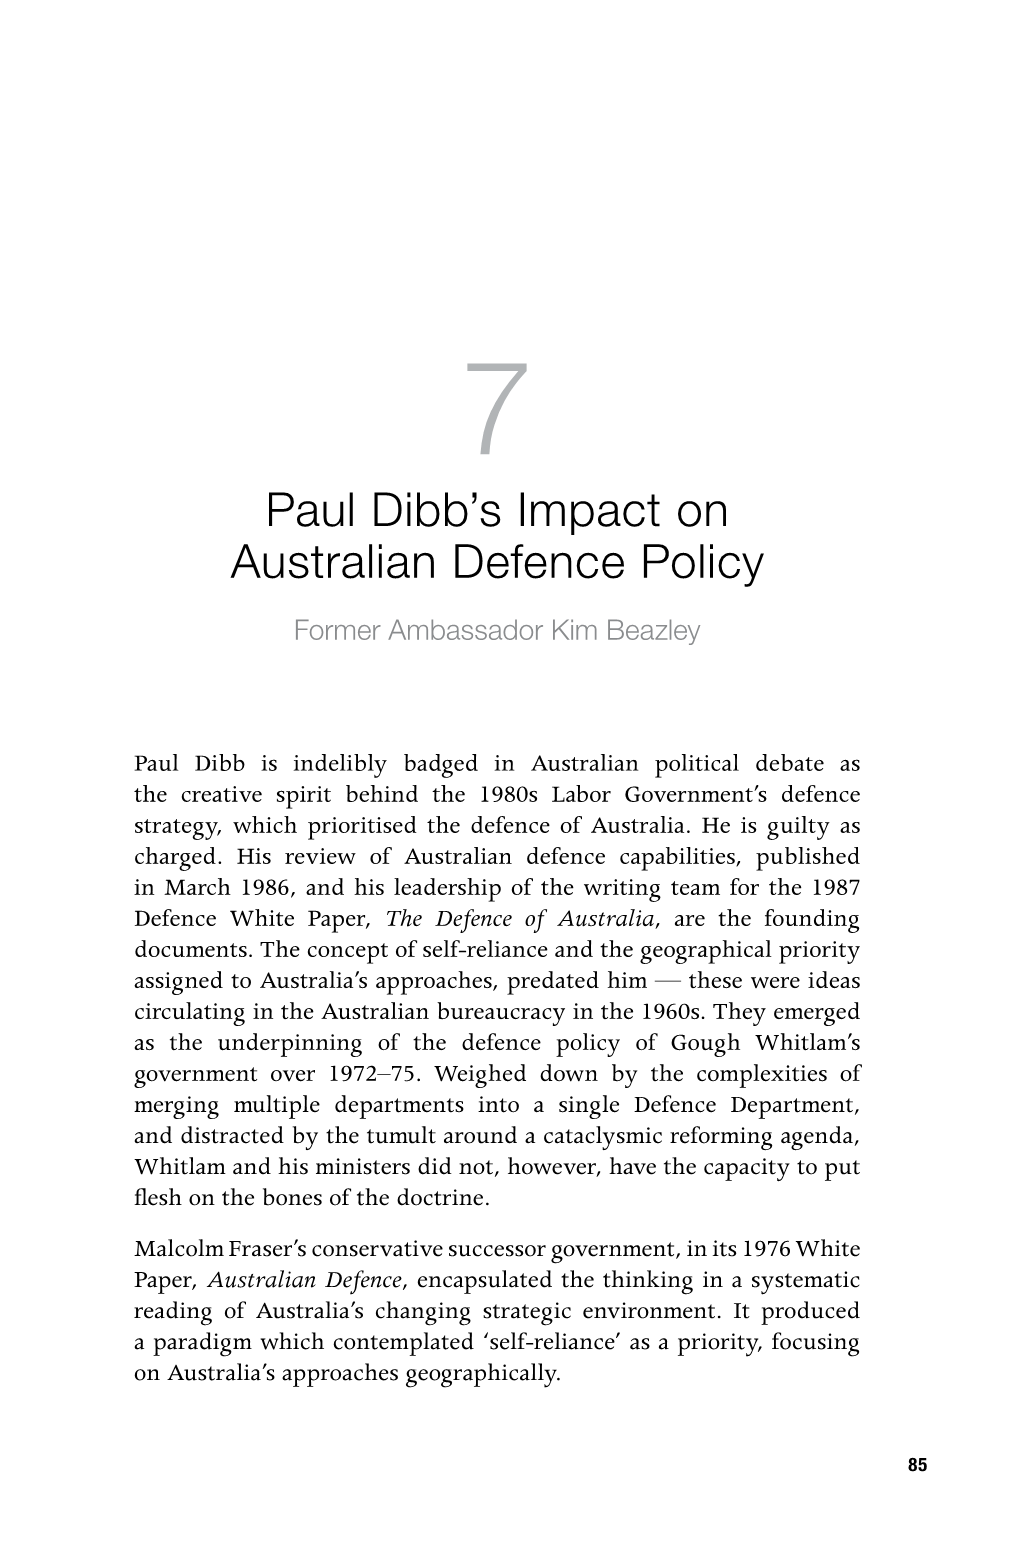 Paul Dibb's Impact on Australian Defence Policy